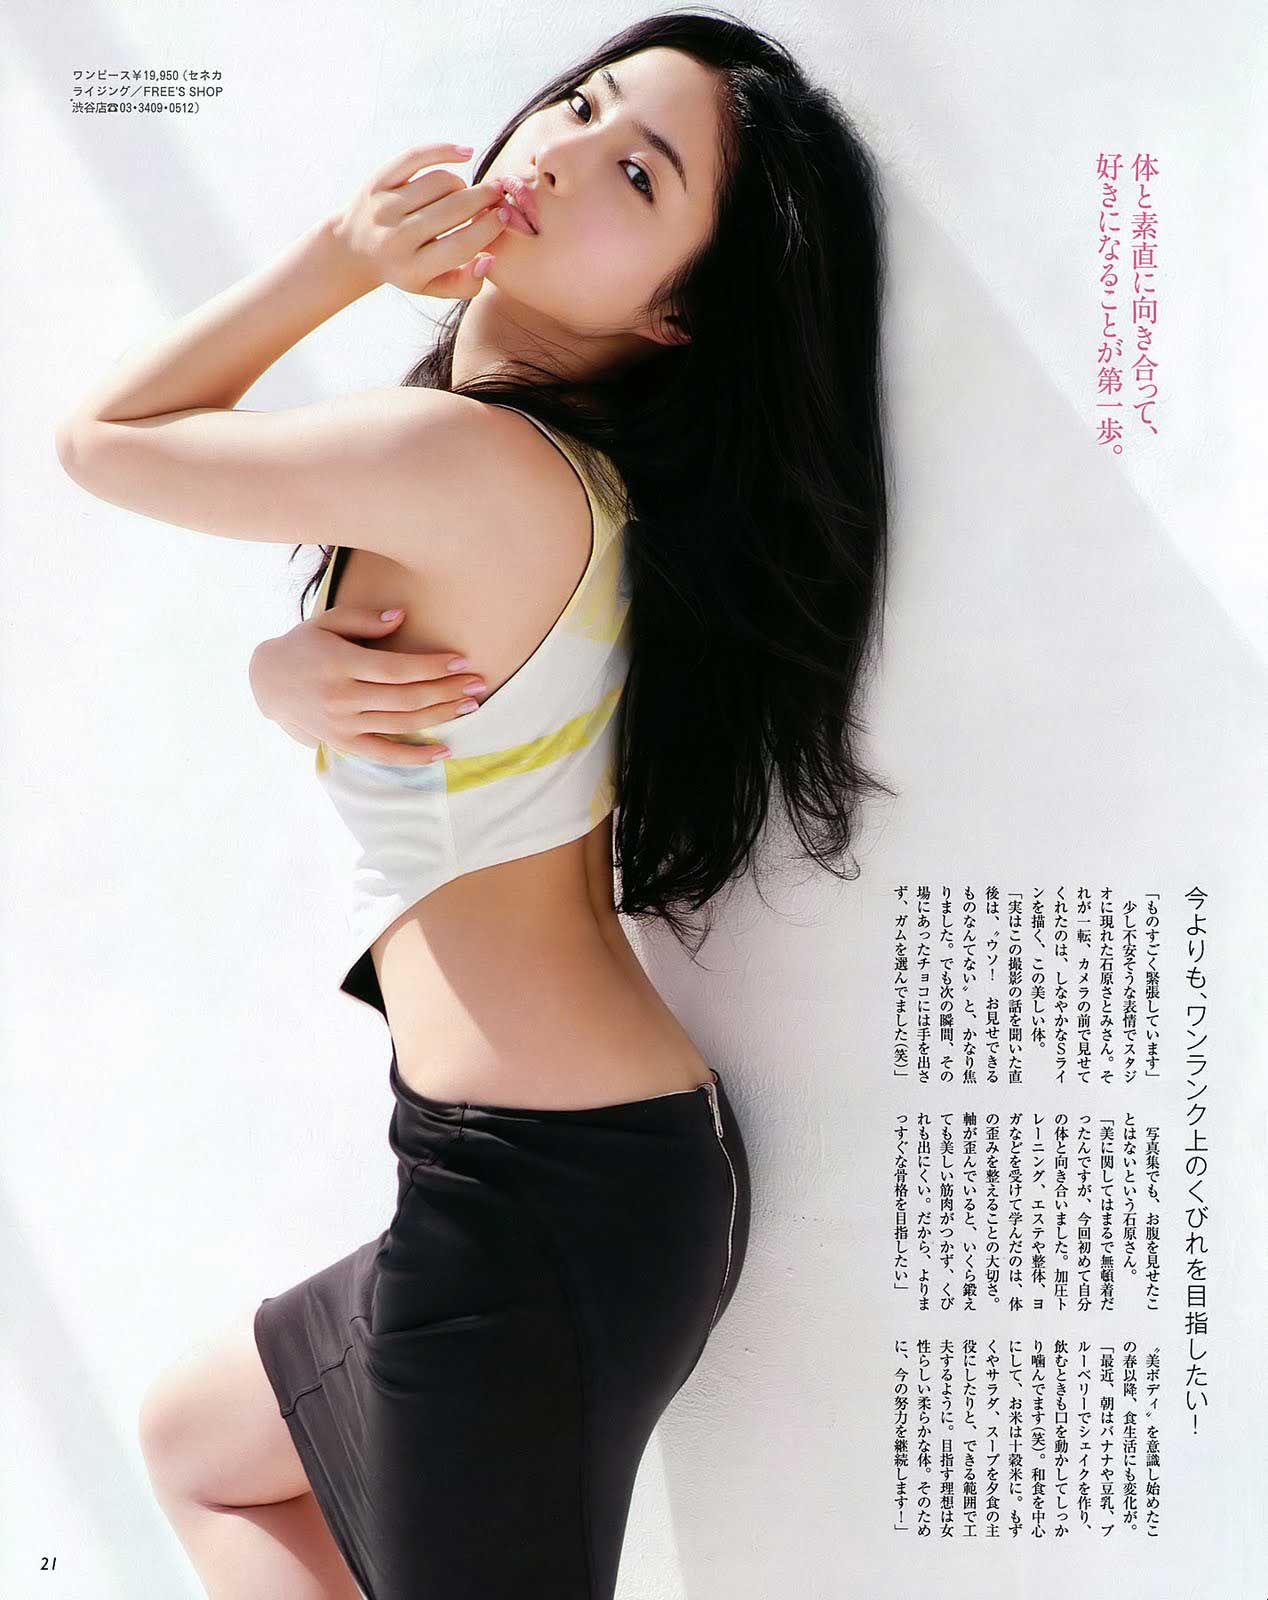 Satomi Ishihara 05